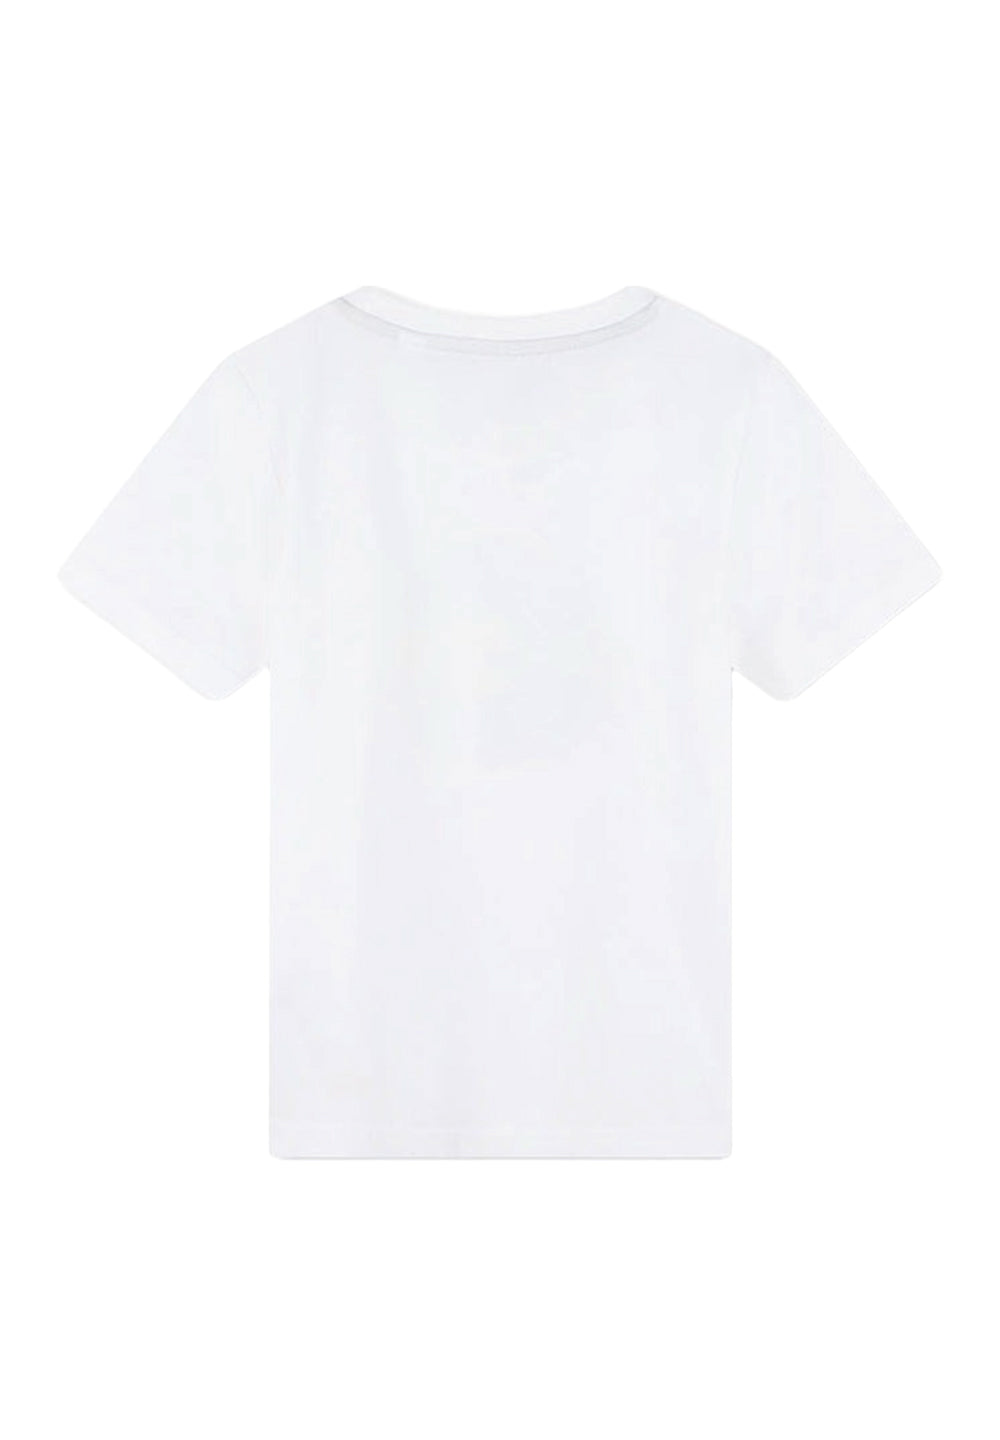 White t-shirt for boy